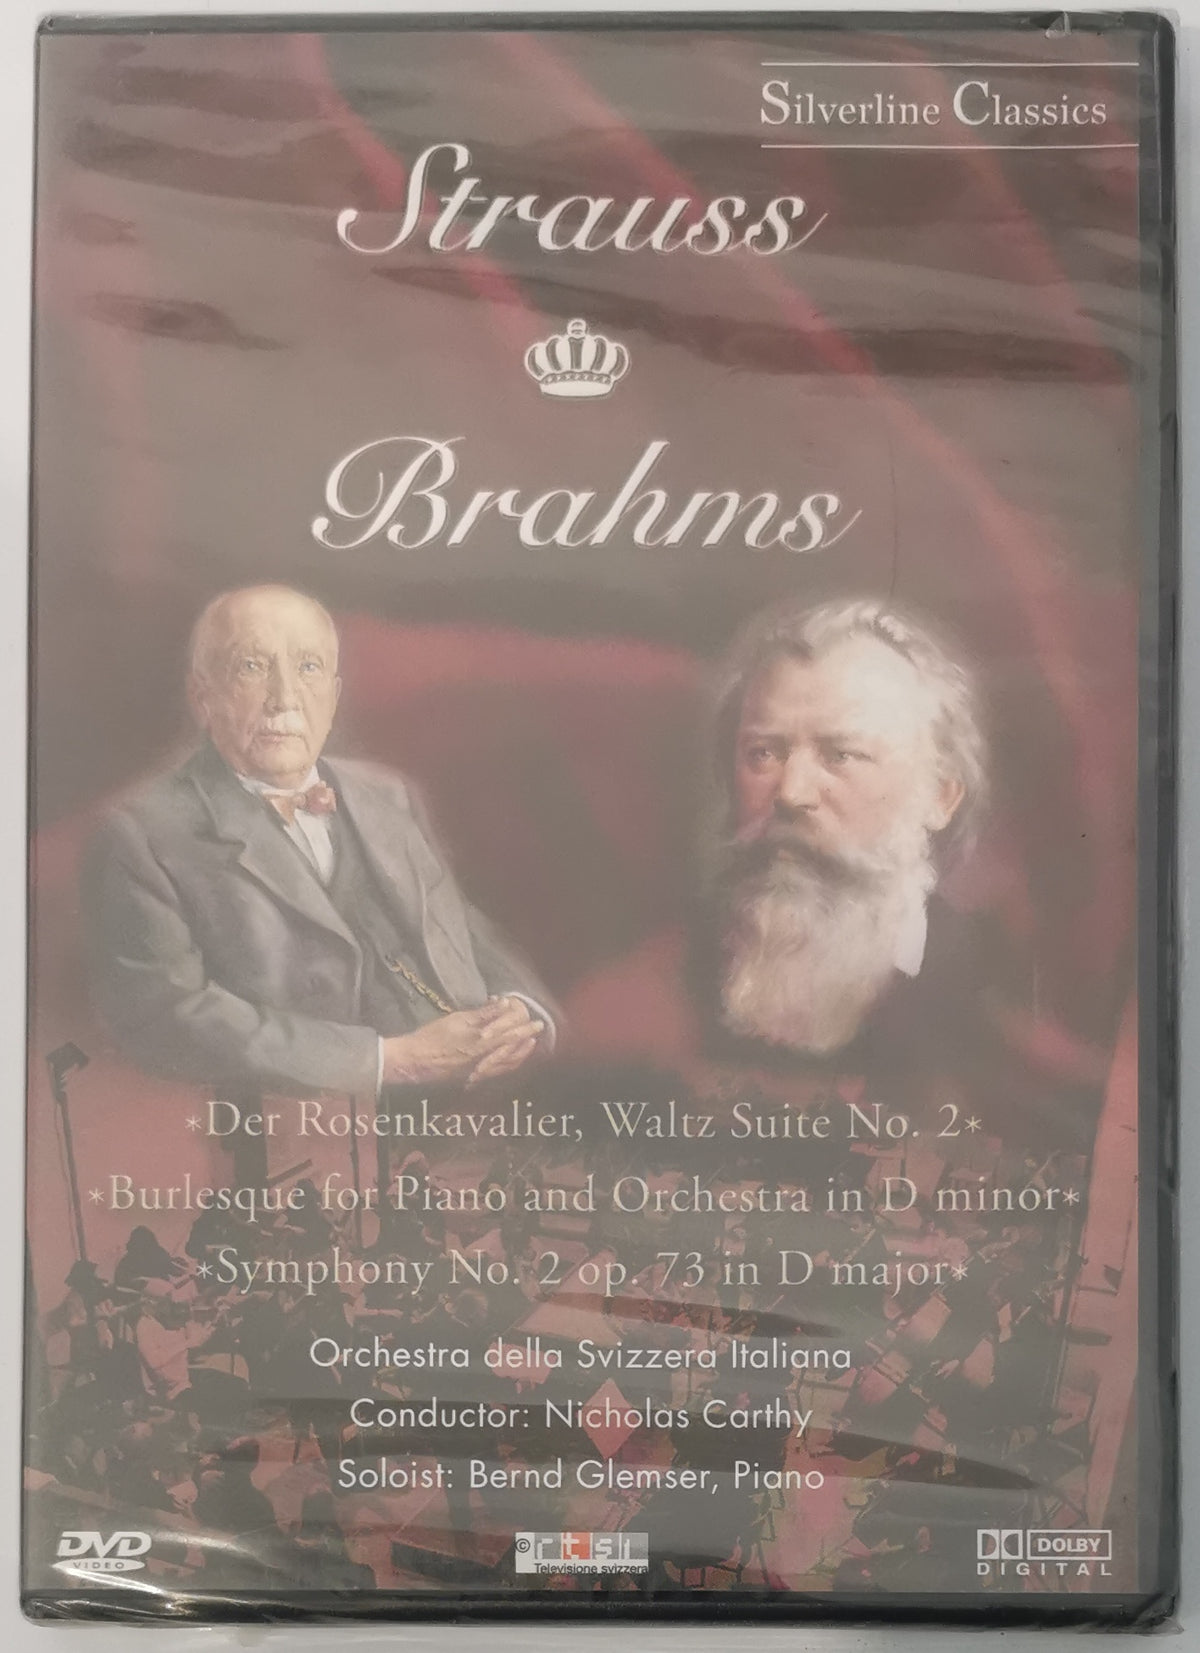 Strauss Brahms Der Rosenkavalier Waltz Suite Nol 2 Burlesque for Piano and Orchestra Symphony No 2 (DVD) [Neu]